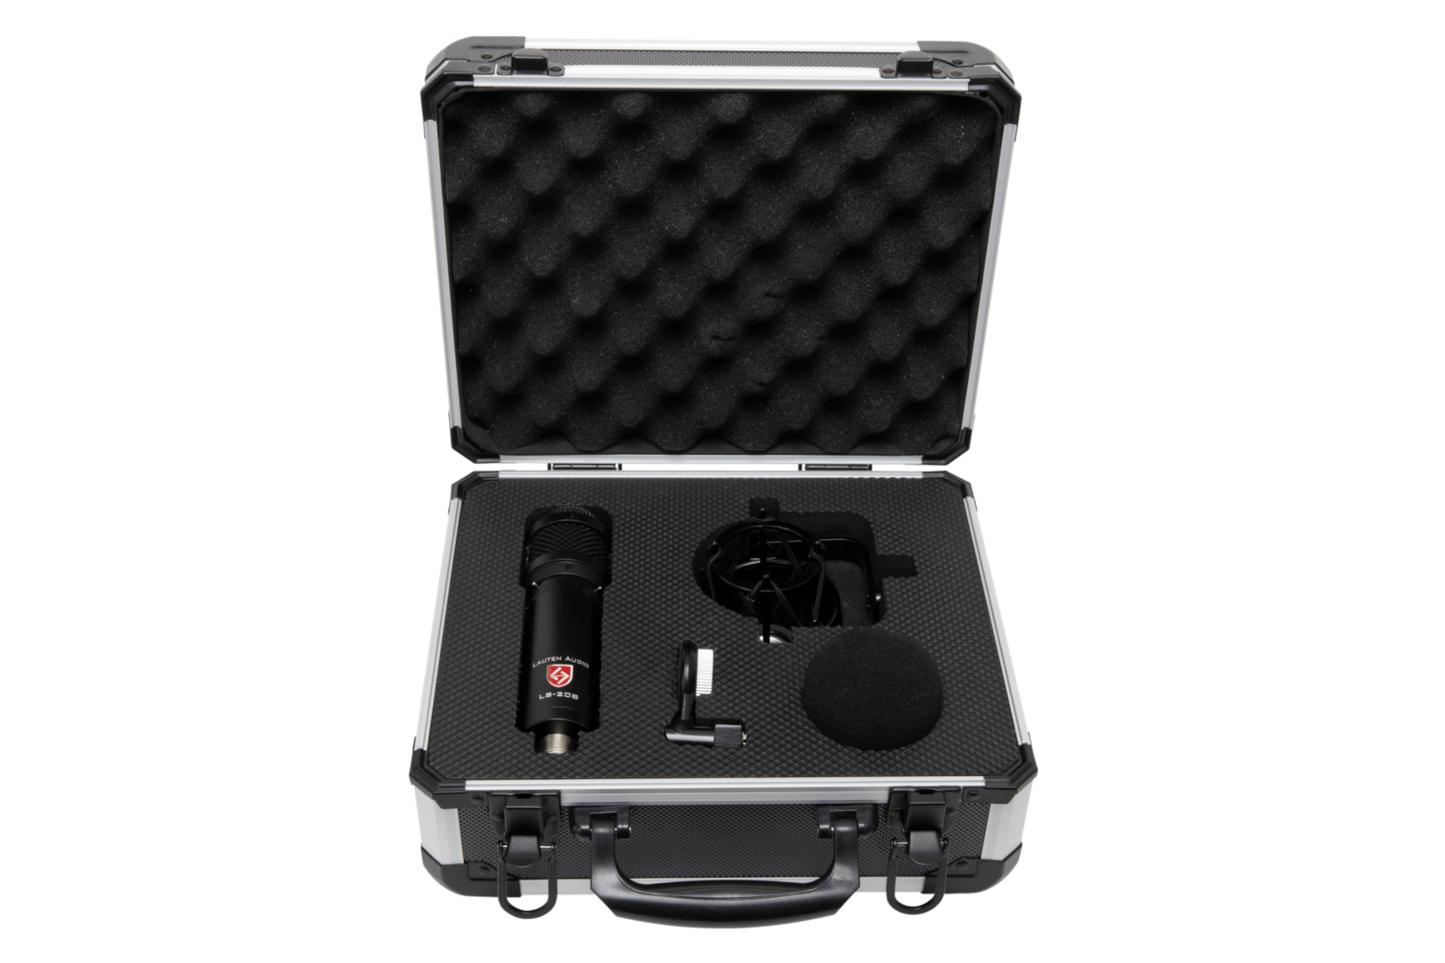 Lauten Audio LS-208 Large-diaphragm Front-address Condenser Microphone